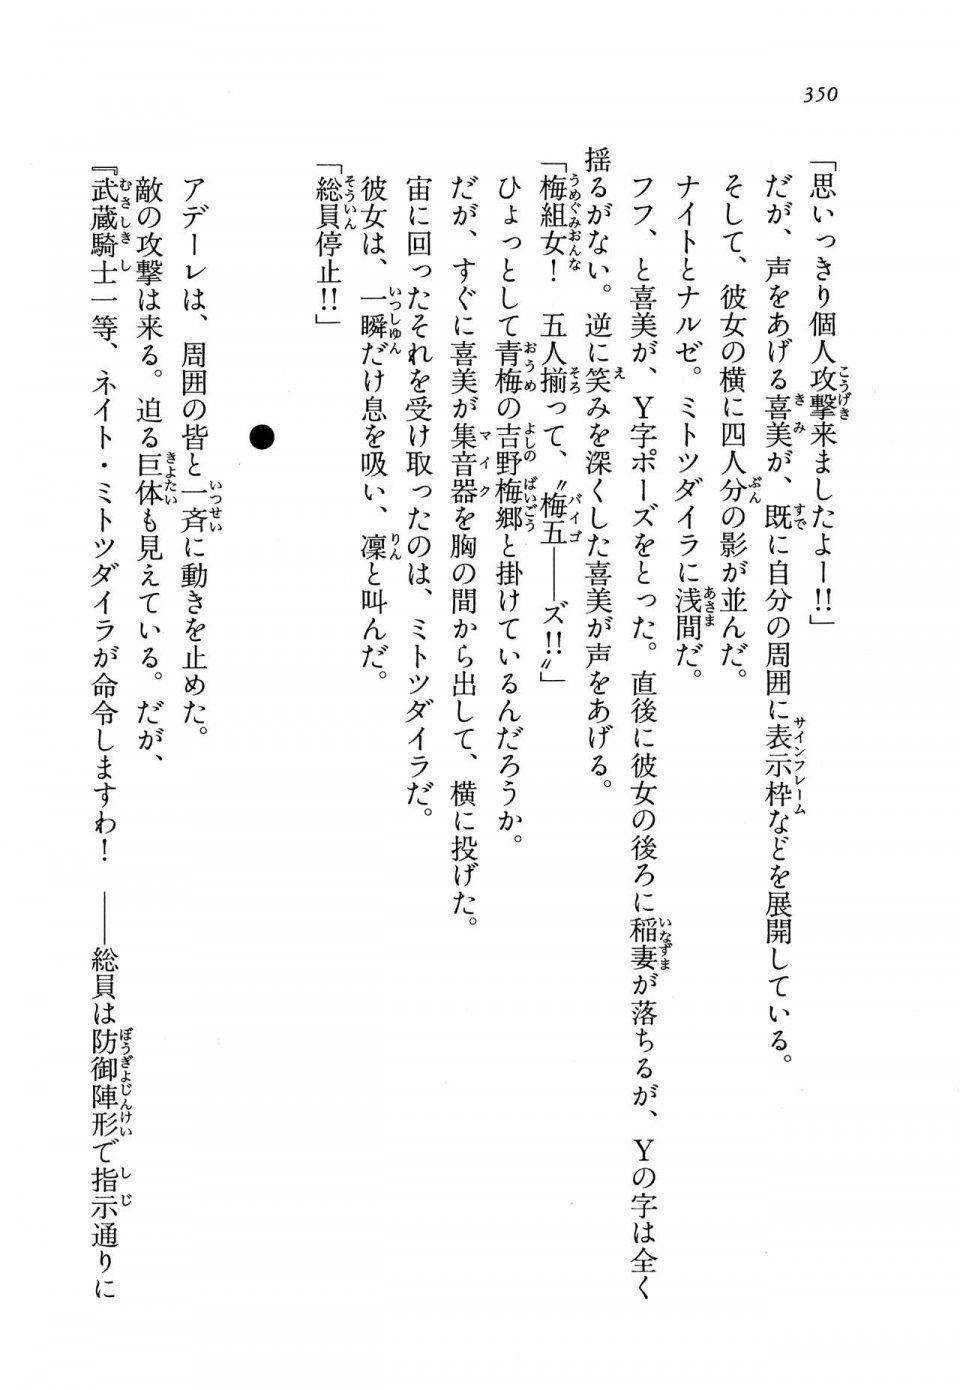 Kyoukai Senjou no Horizon BD Special Mininovel Vol 8(4B) - Photo #354